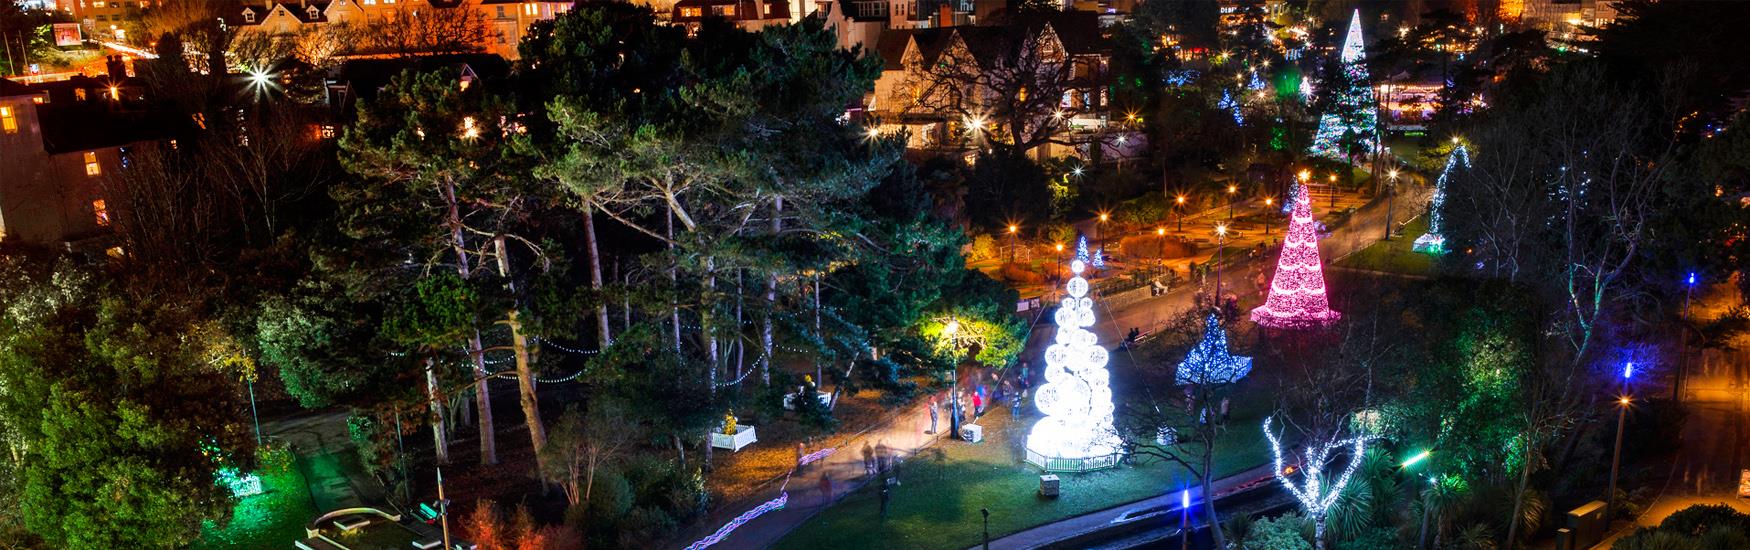 Explore the magical Christmas Tree Wonderland